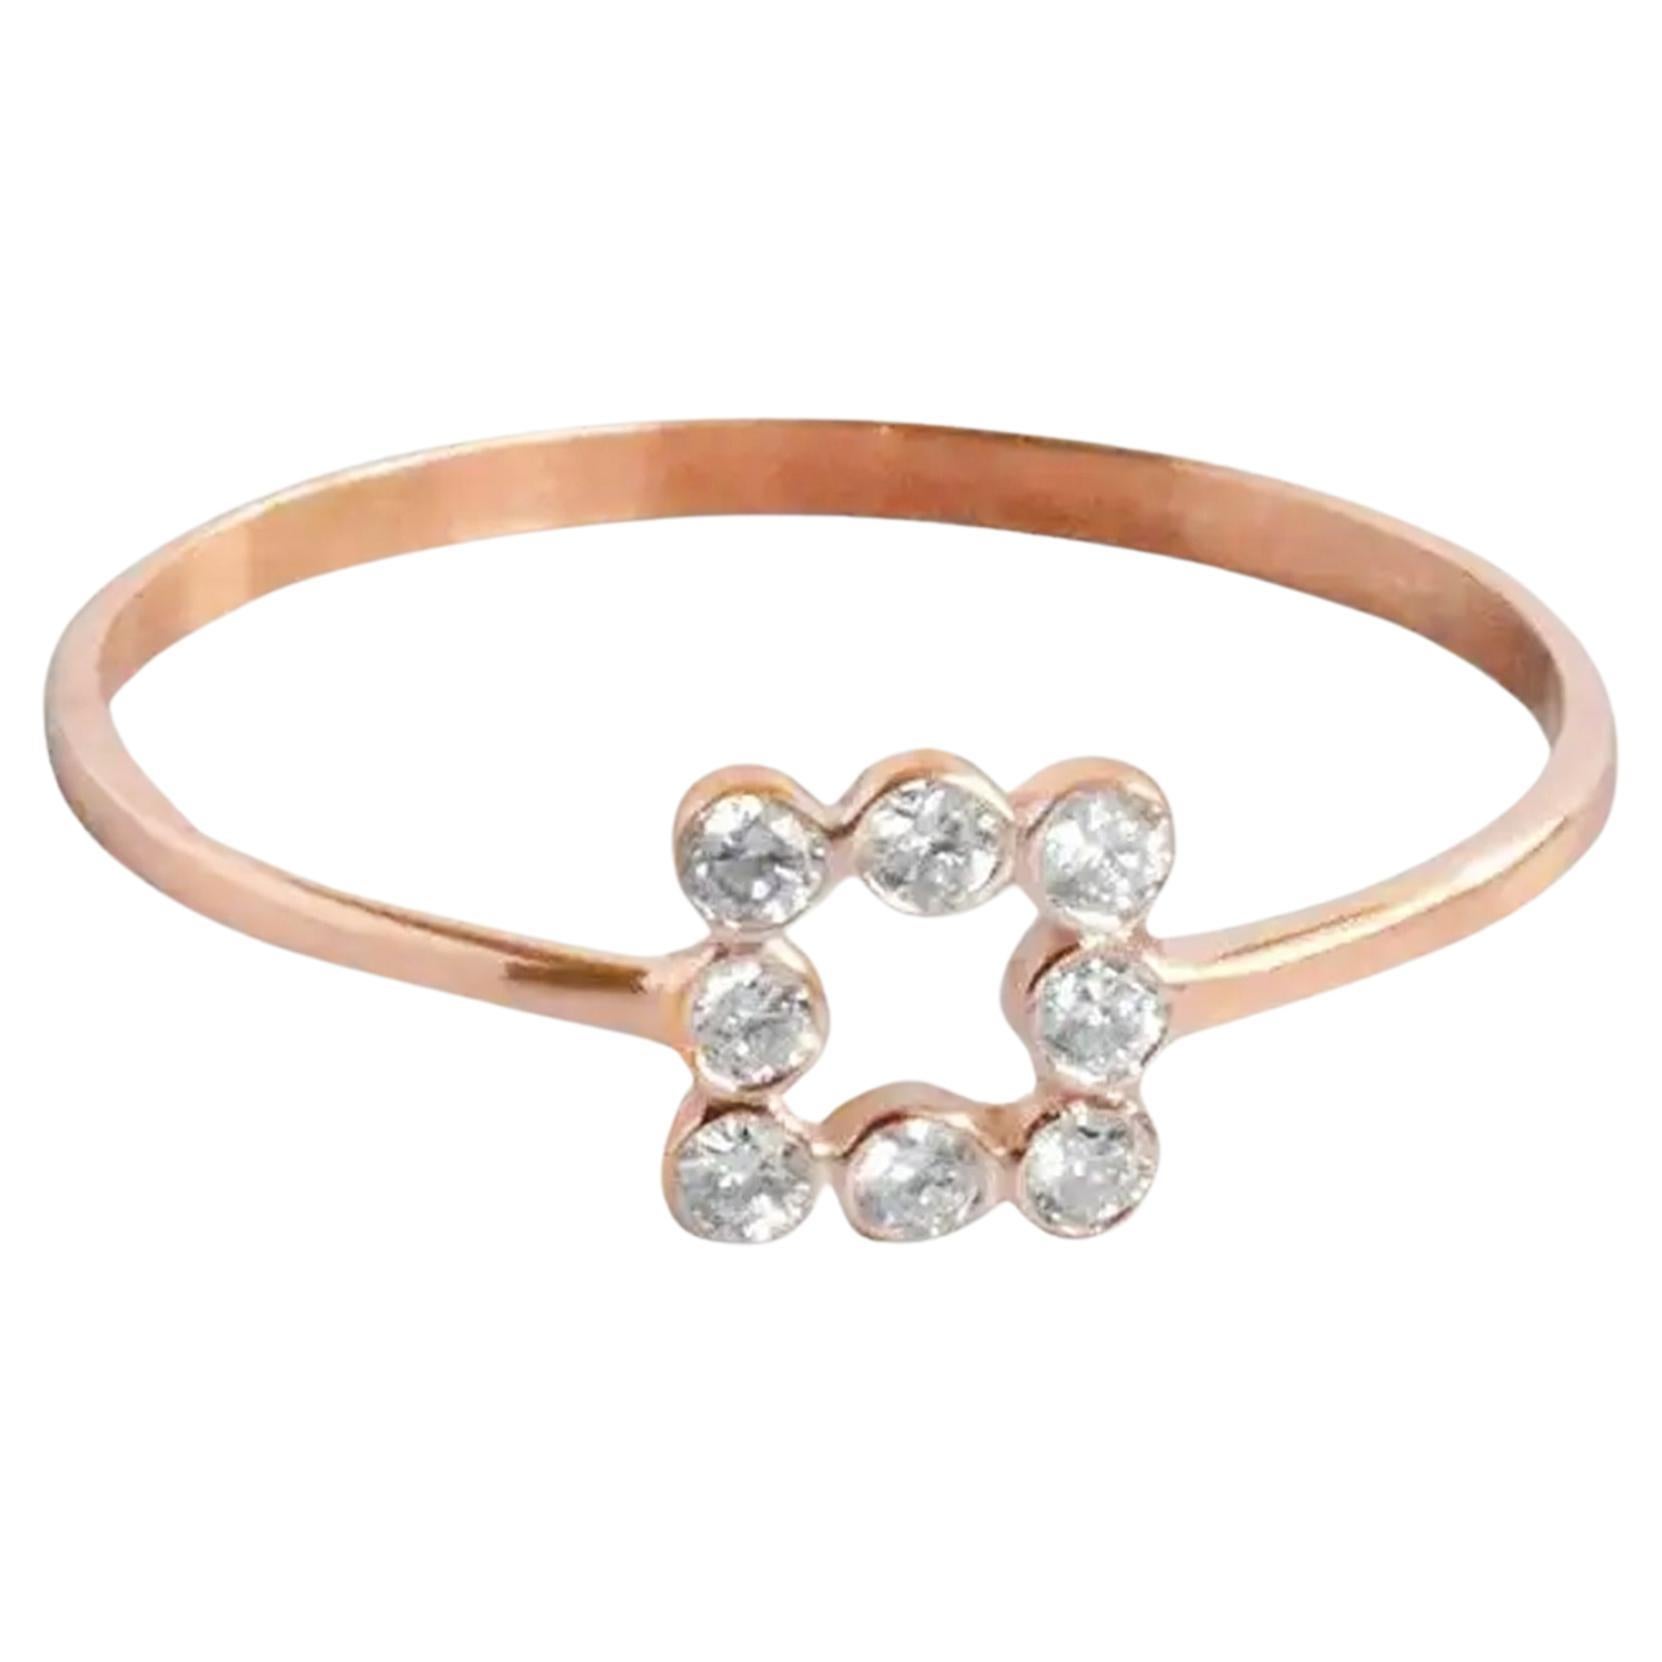 For Sale:  18k Gold Diamond Ring Bezel Set Diamond Band Ring Square Ring 2